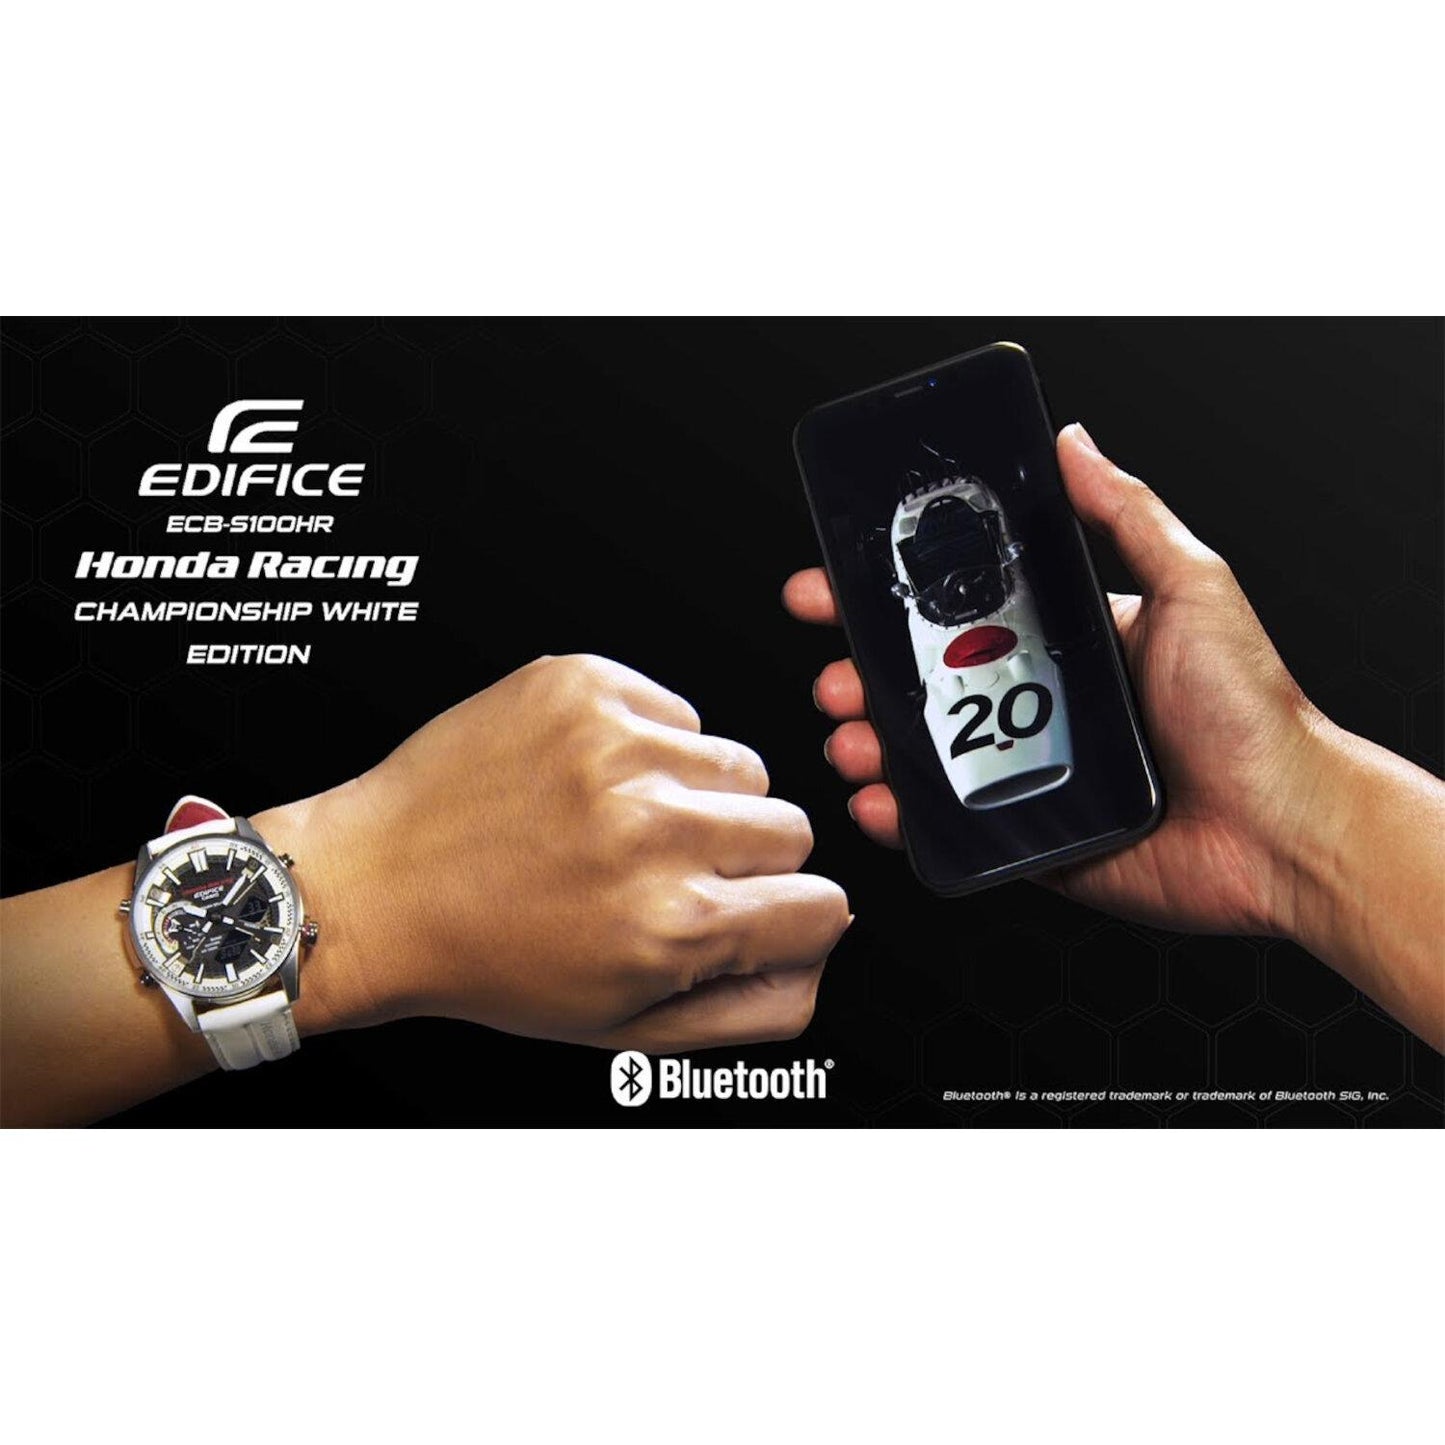 Reloj CASIO ECB-S100HR-1ADR Edifice Honda Racing-Blanco